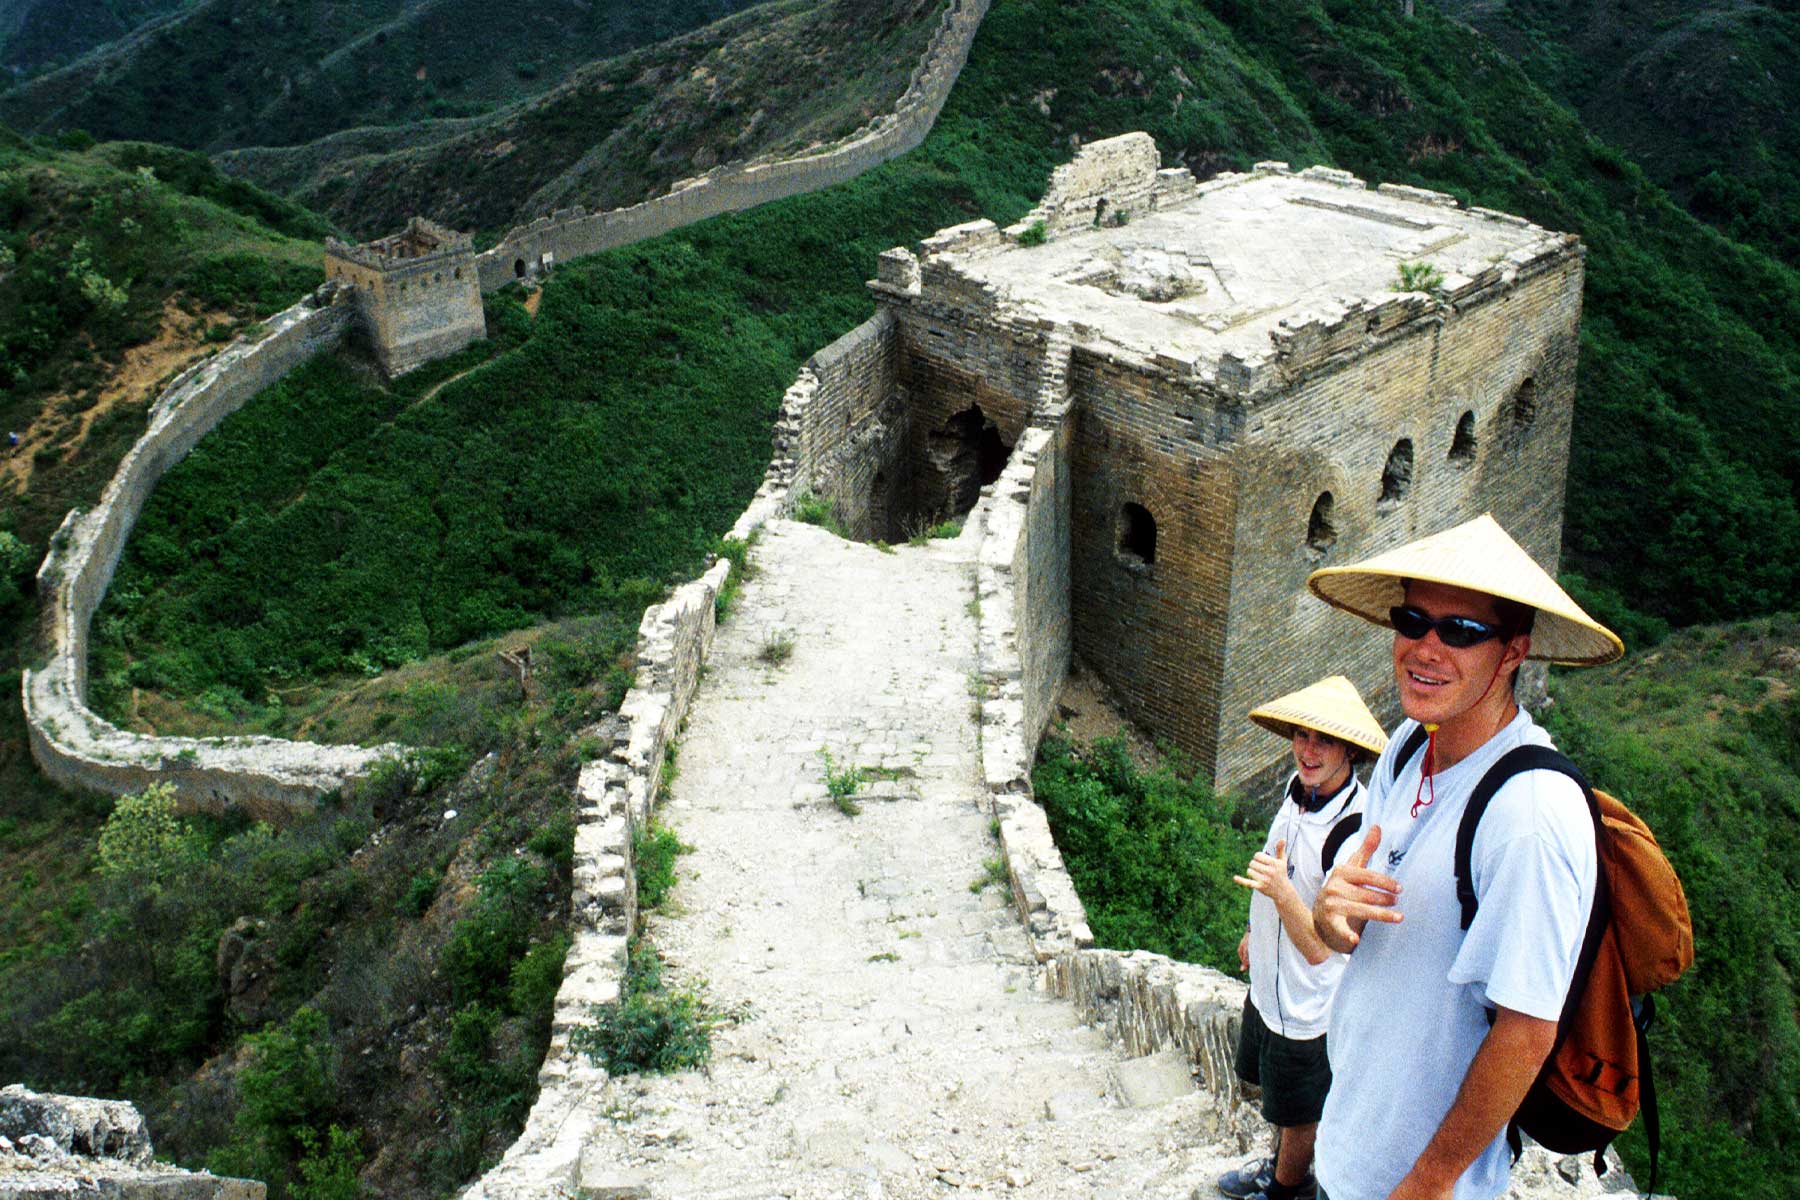 Hiking on the Jin Shan Ling 金山嶺 Great Wall of China | Surf Doctor Steven Martin | Skate the Wall Jinshanling